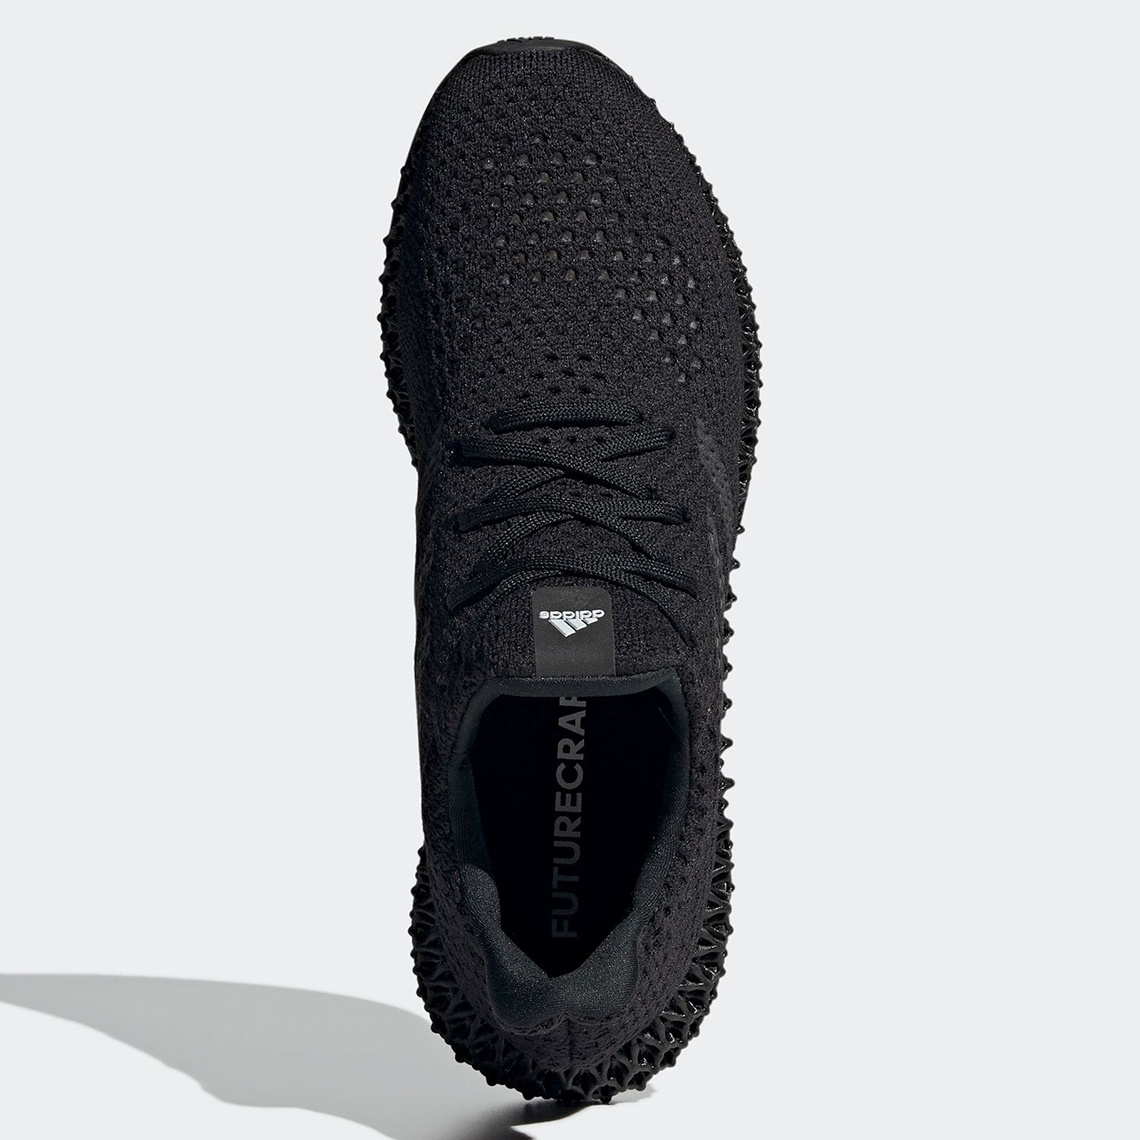 Adidas Futurecraft 4d Triple Black Q46228 5